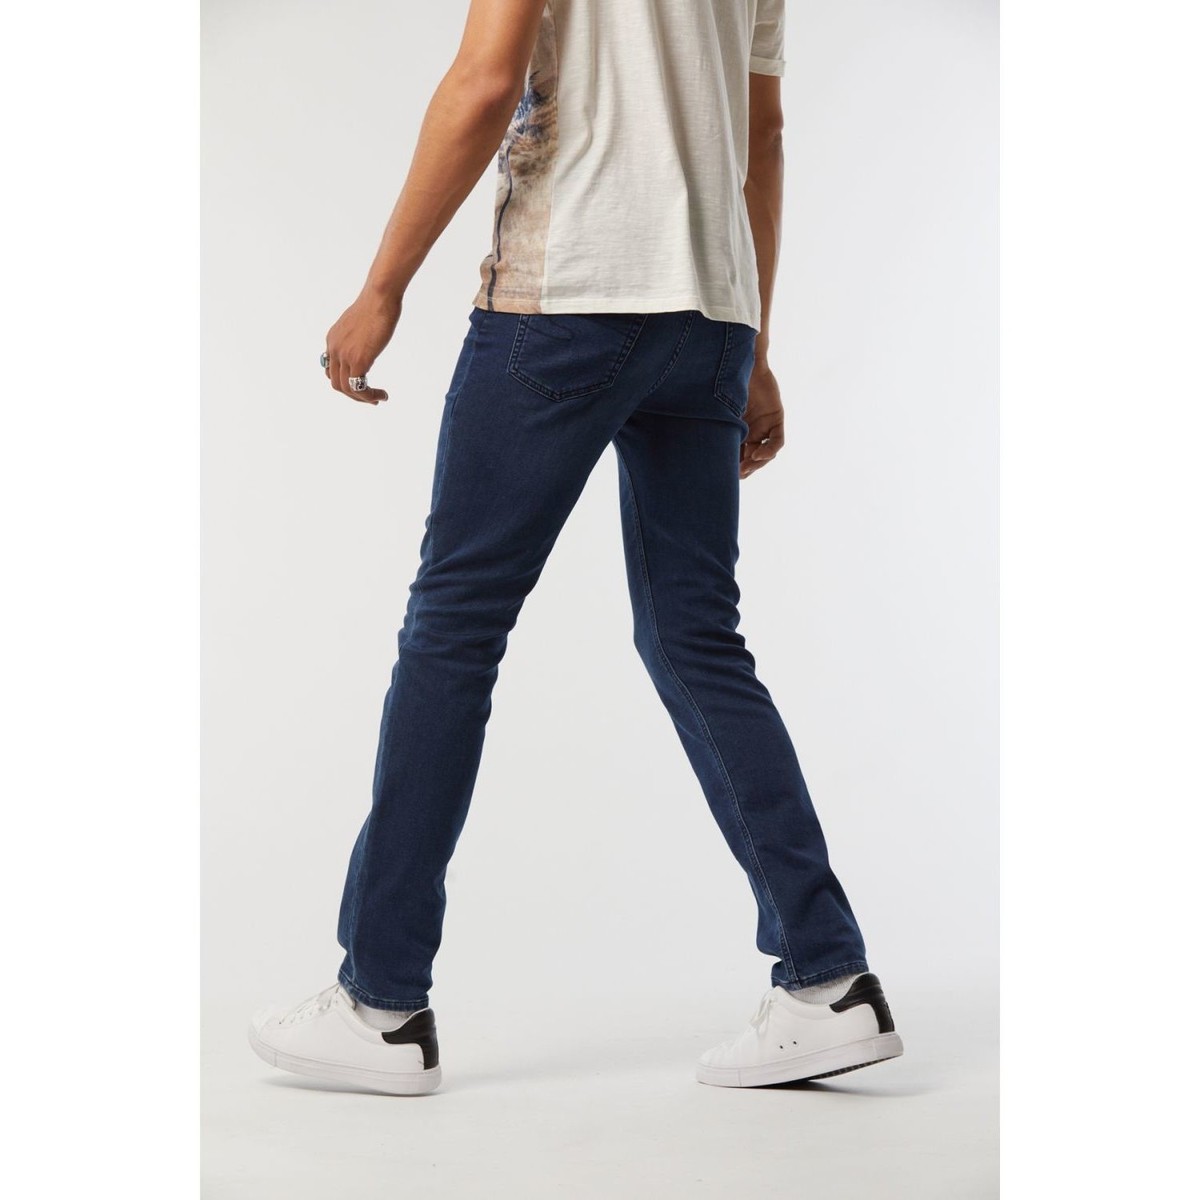 Lee Cooper Bleu Jeans LC126 MEDIUM BLUE - L34 ylJUYC2t